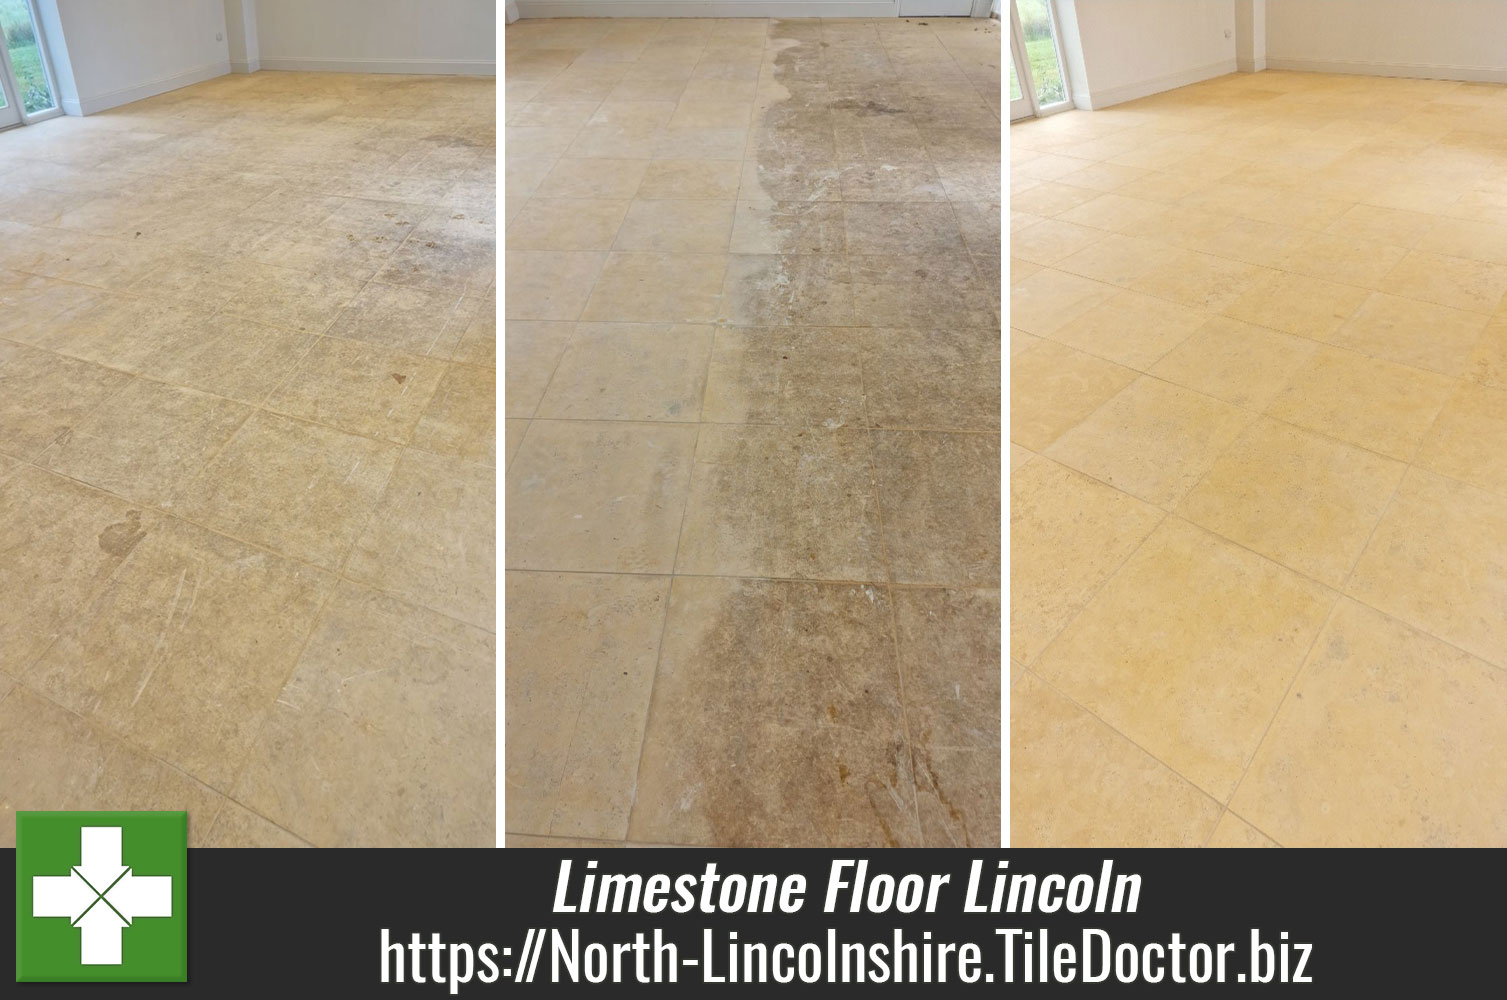 https://north-lincolnshire.tiledoctor.biz/limestone-floor-renovated-at-historic-doddington-hall-lincoln/